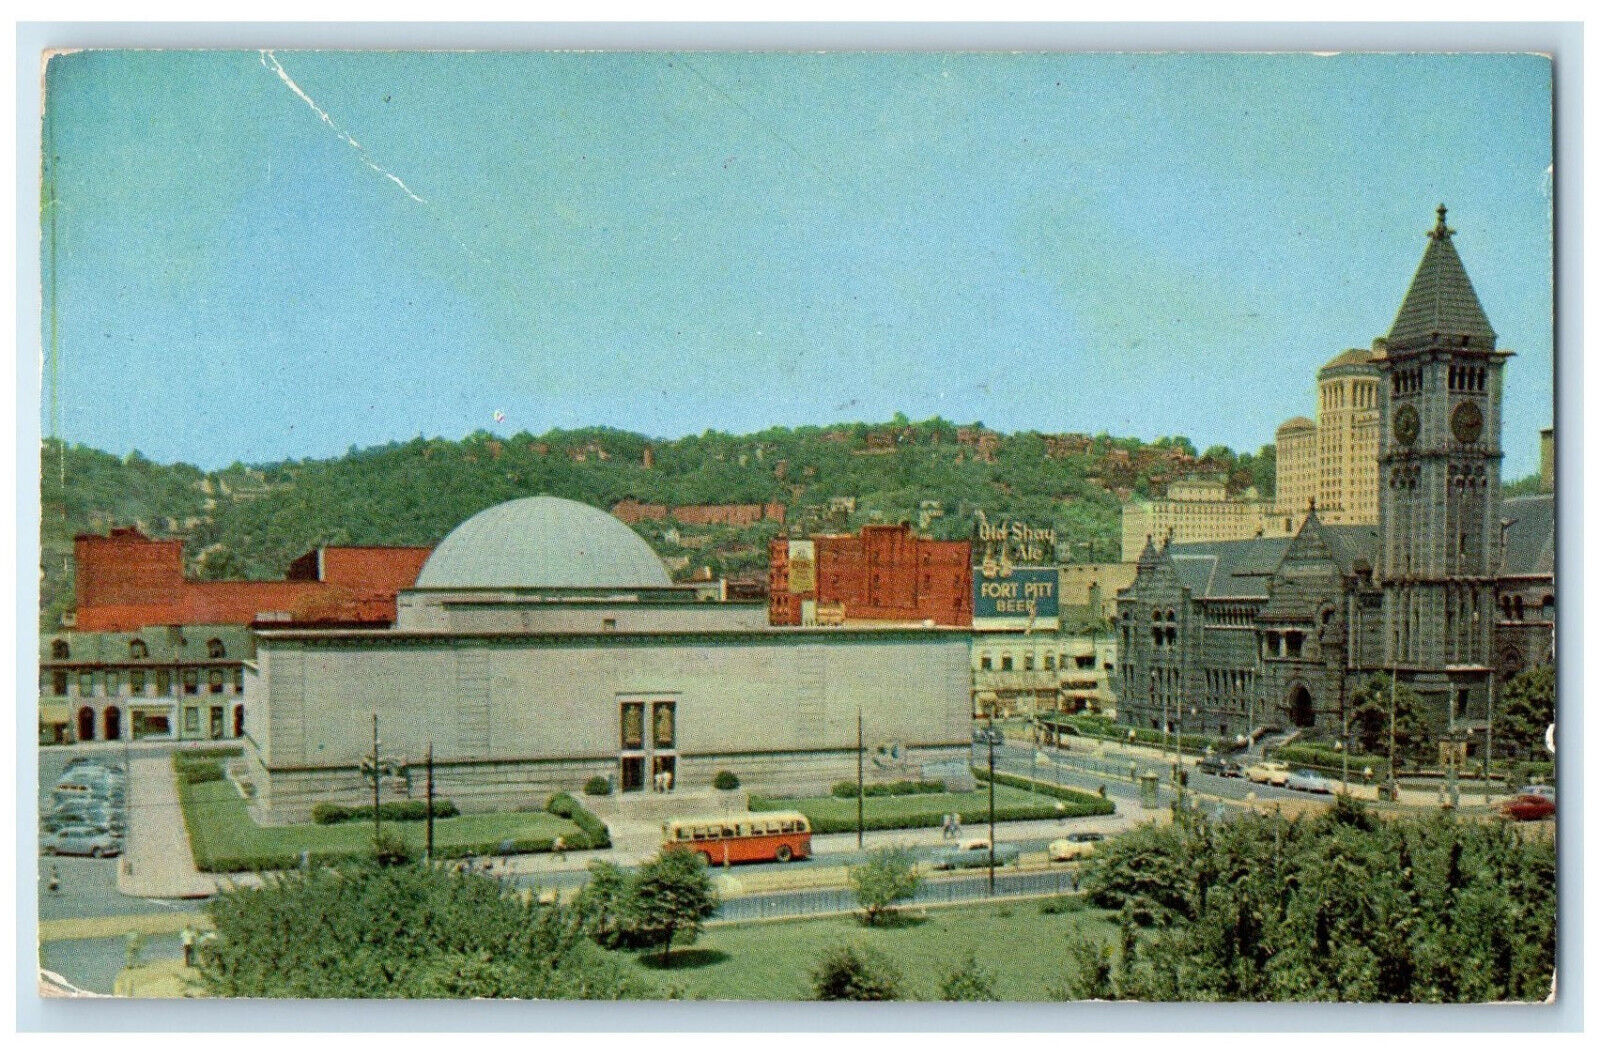 1955 Buhl Planetarium and Institute of Popular Science Pittsburg PA Postcard